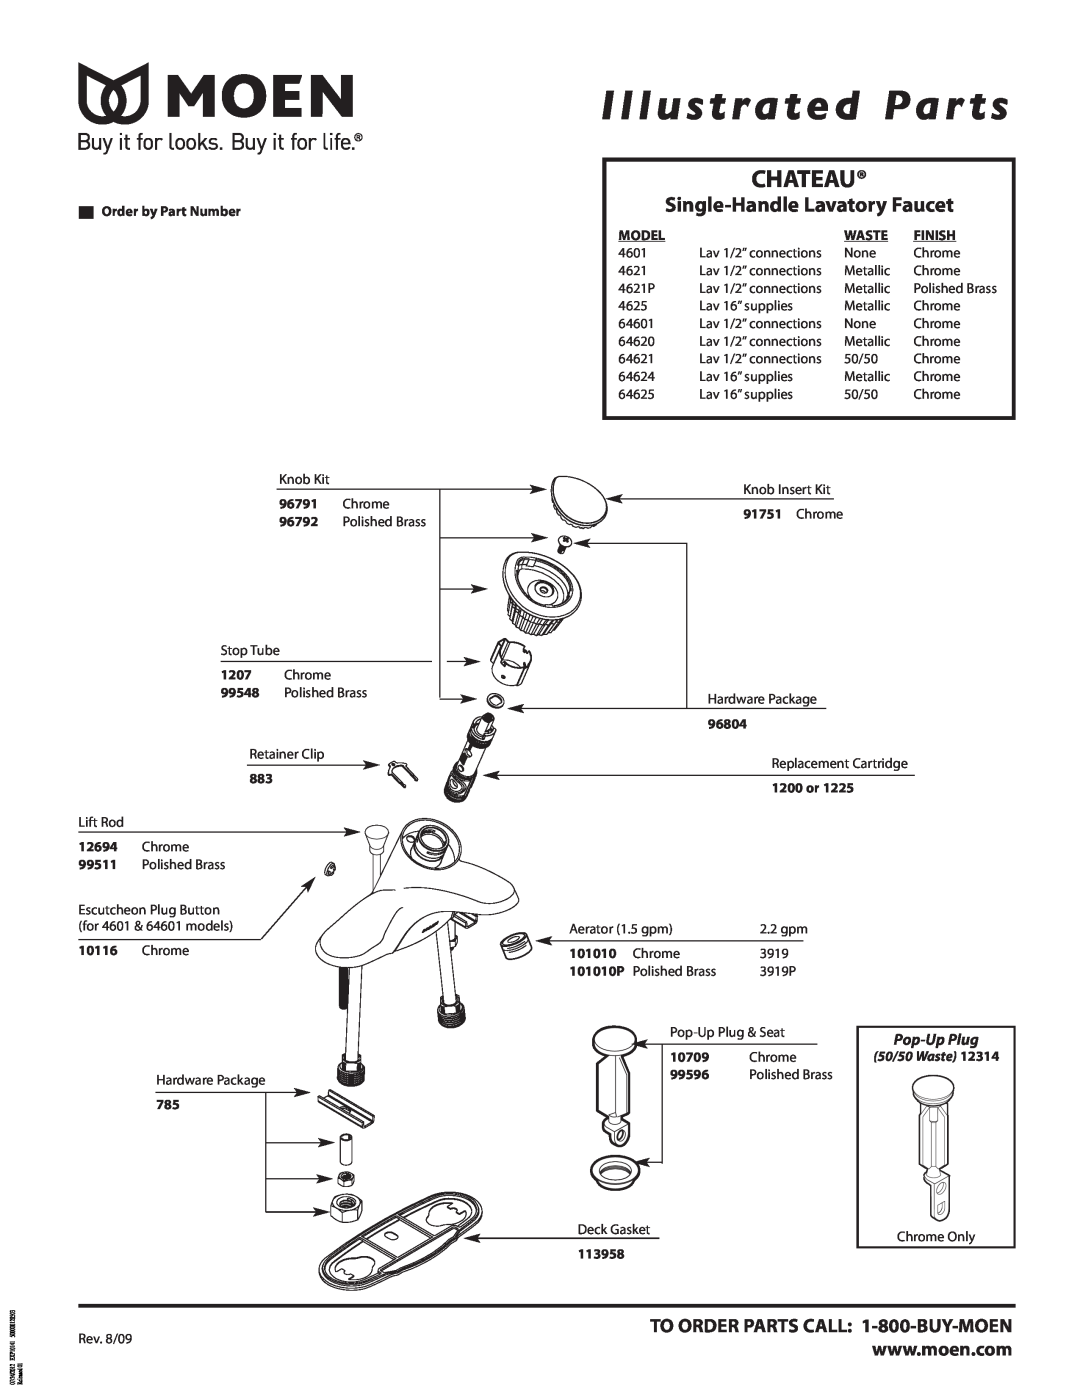 Moen 64601 Illustrated Par ts, Chateau, Single-Handle Lavatory Faucet, TO ORDER PARTS CALL 1-800-BUY-MOEN, Pop-Up Plug 